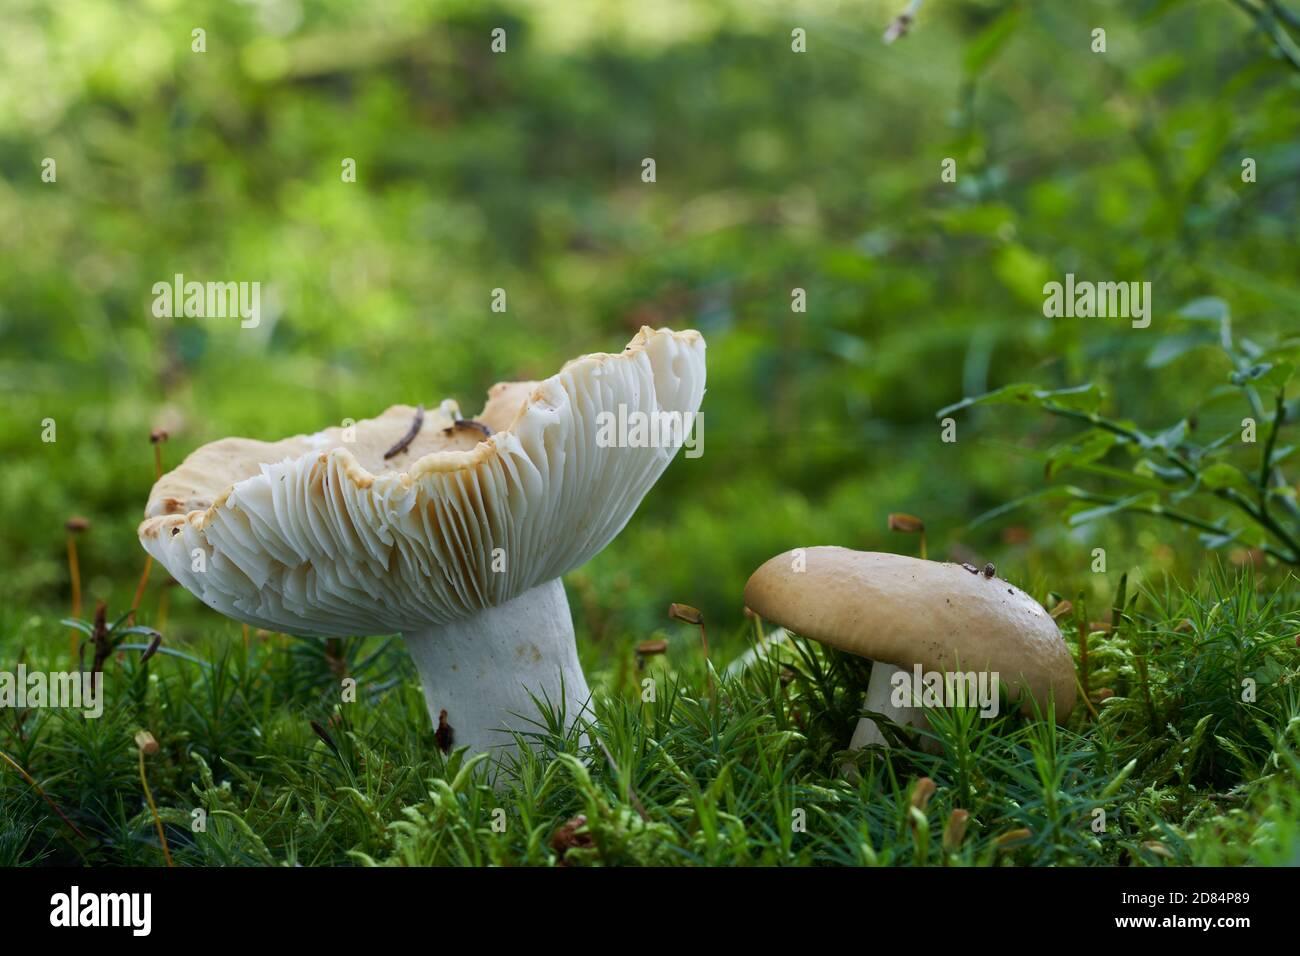 edible-mushroom-russula-ochroleuca-in-the-spruce-forest-known-as-brittlegills-or-ochre-brittlegill-wild-mushroom-growing-in-the-moss-2D84P89.jpg